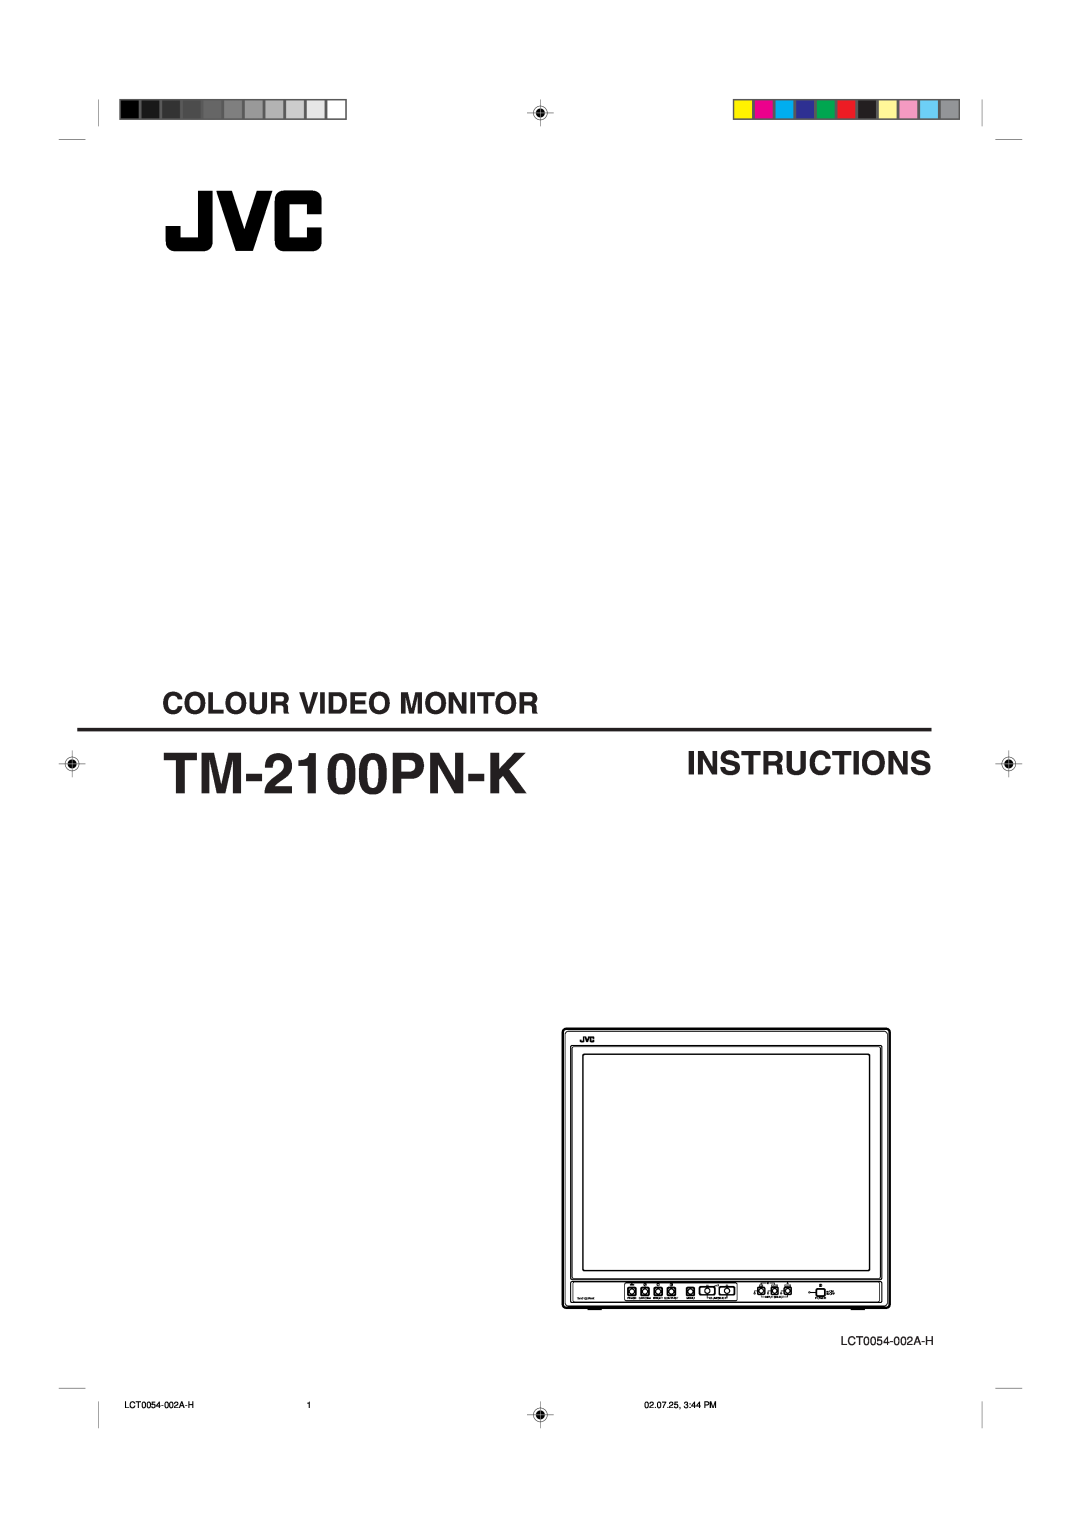 JVC TM-2100PN-K manual Colour Video Monitor, Instructions, Phase Chroma Bright Contrast, Menu, Power, Input Select 